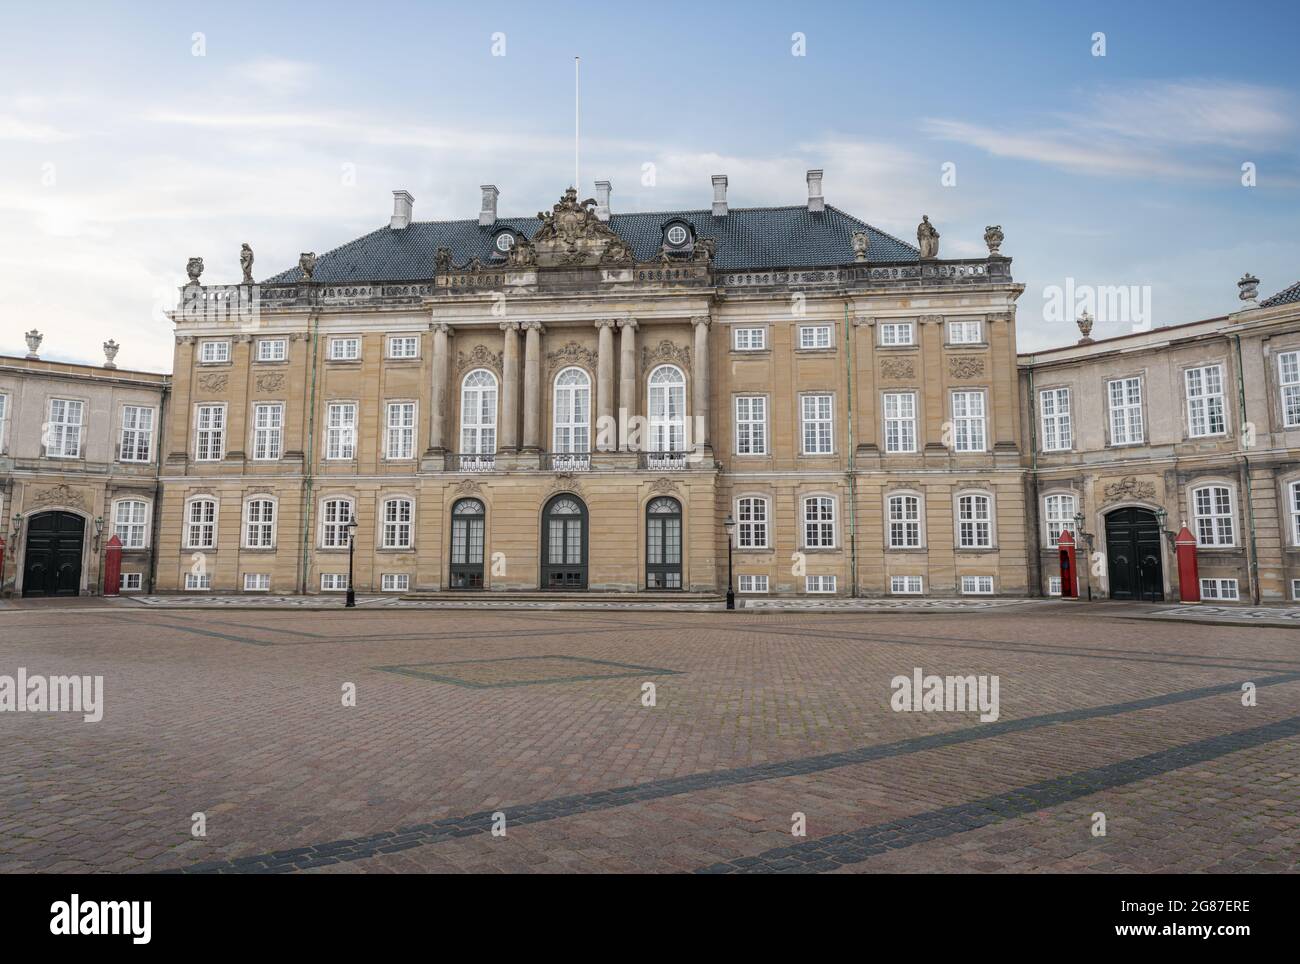 Amalienborg Palace - Christian IX's Palace, Queen Margrethe II official residence - Copenhagen, Denmark Stock Photo